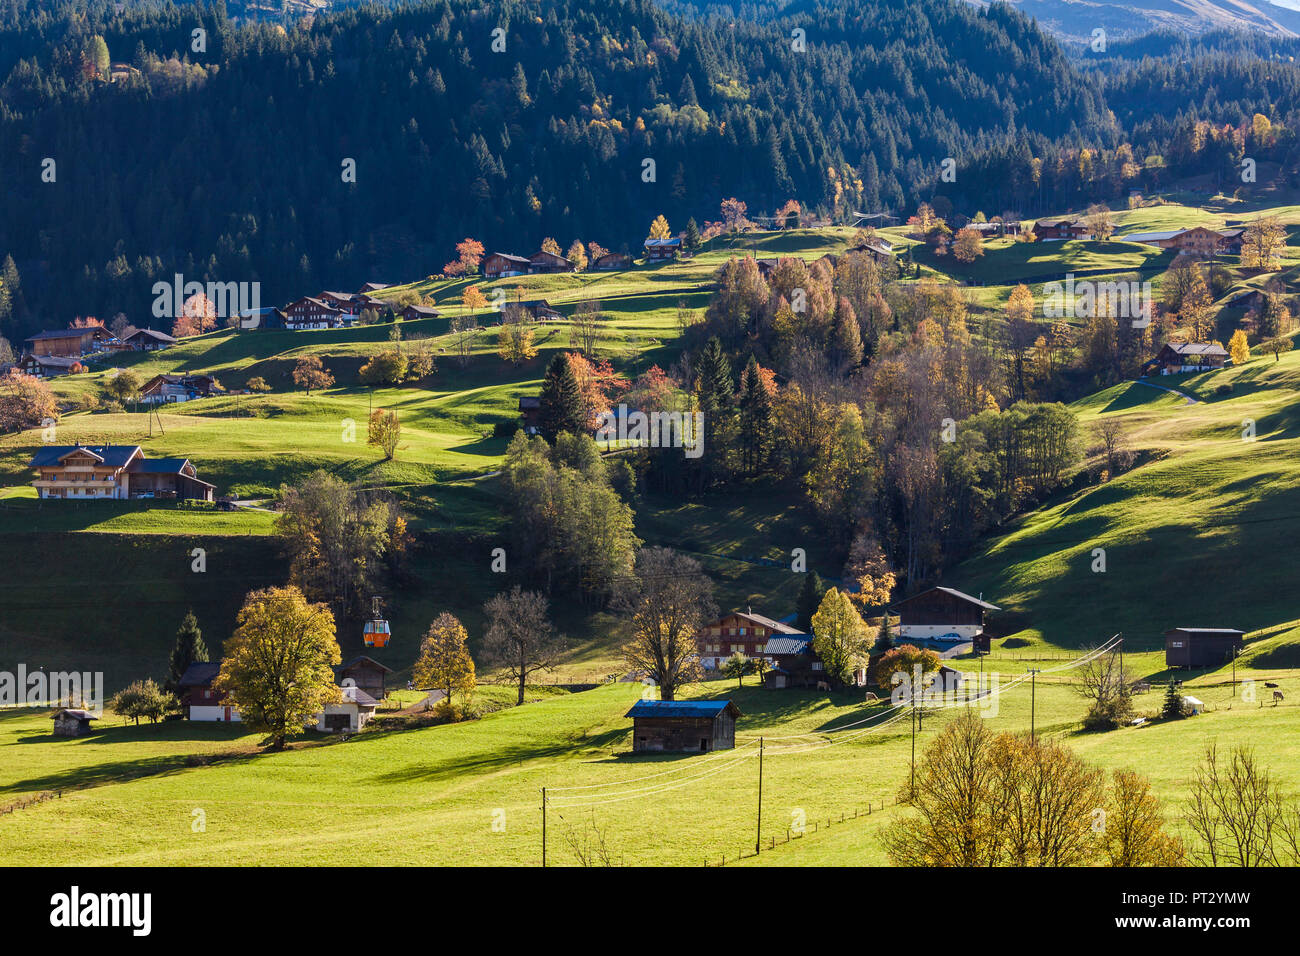 Switzerland, Canton Bern, Bernese Oberland, Grindelwald, chalets, gondola lift, mountain railway Stock Photo